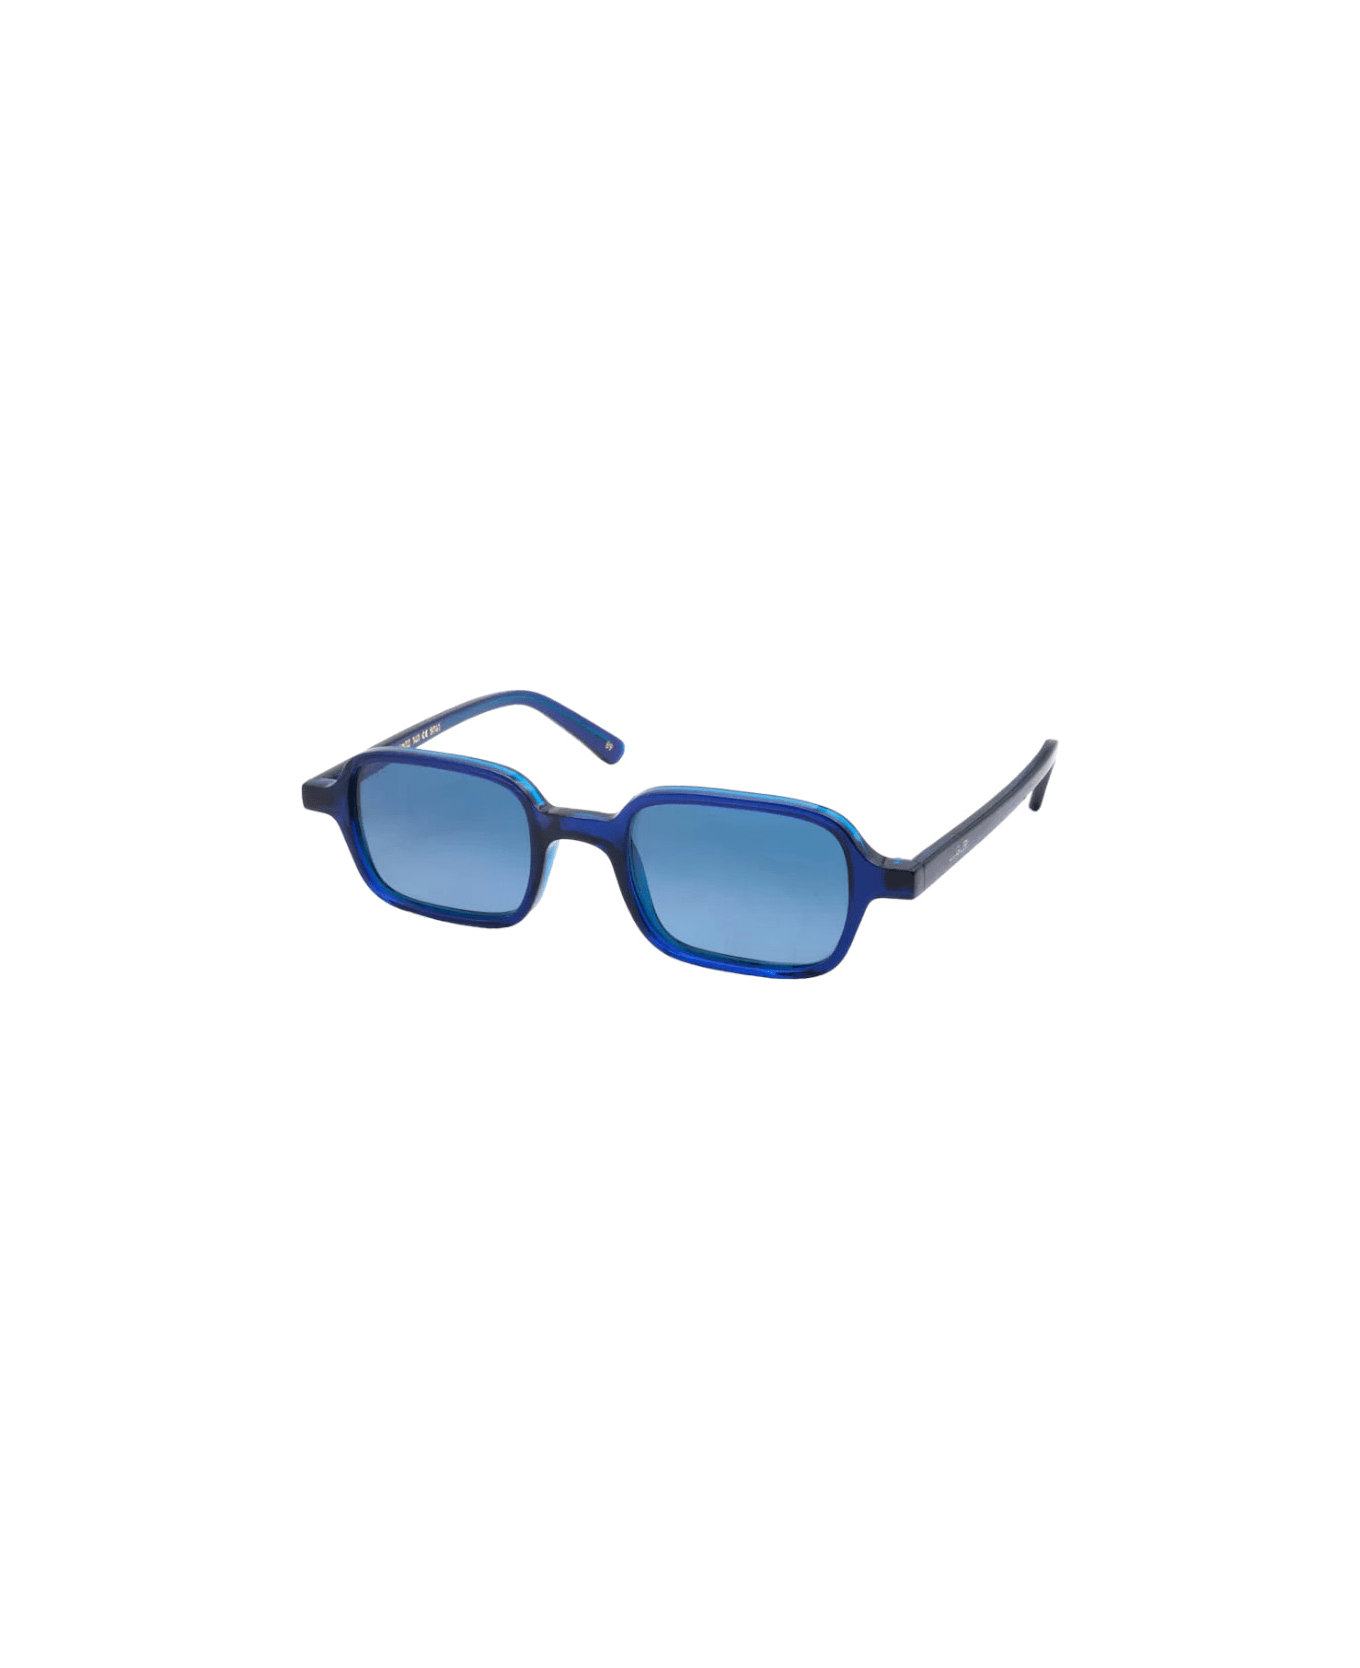 L.G.R. Marrackech Sunglasses サングラス